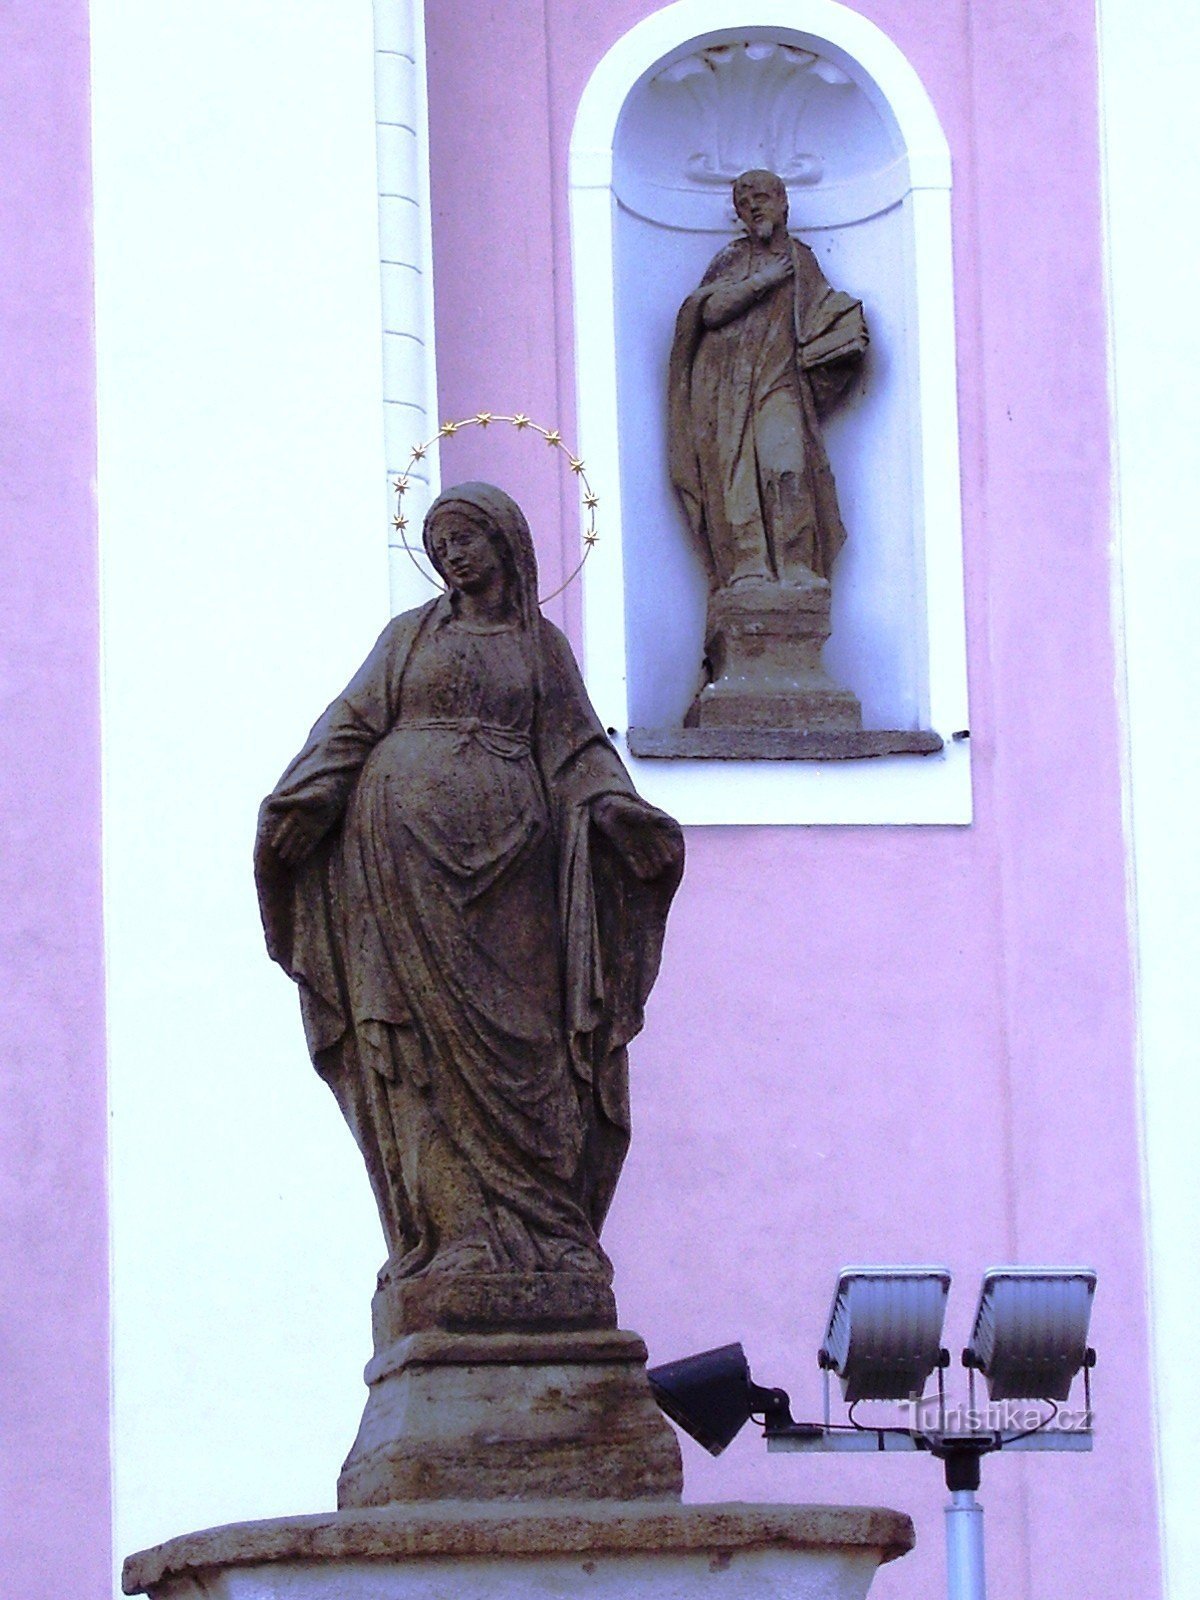 Nové Veselí - biserică și statui